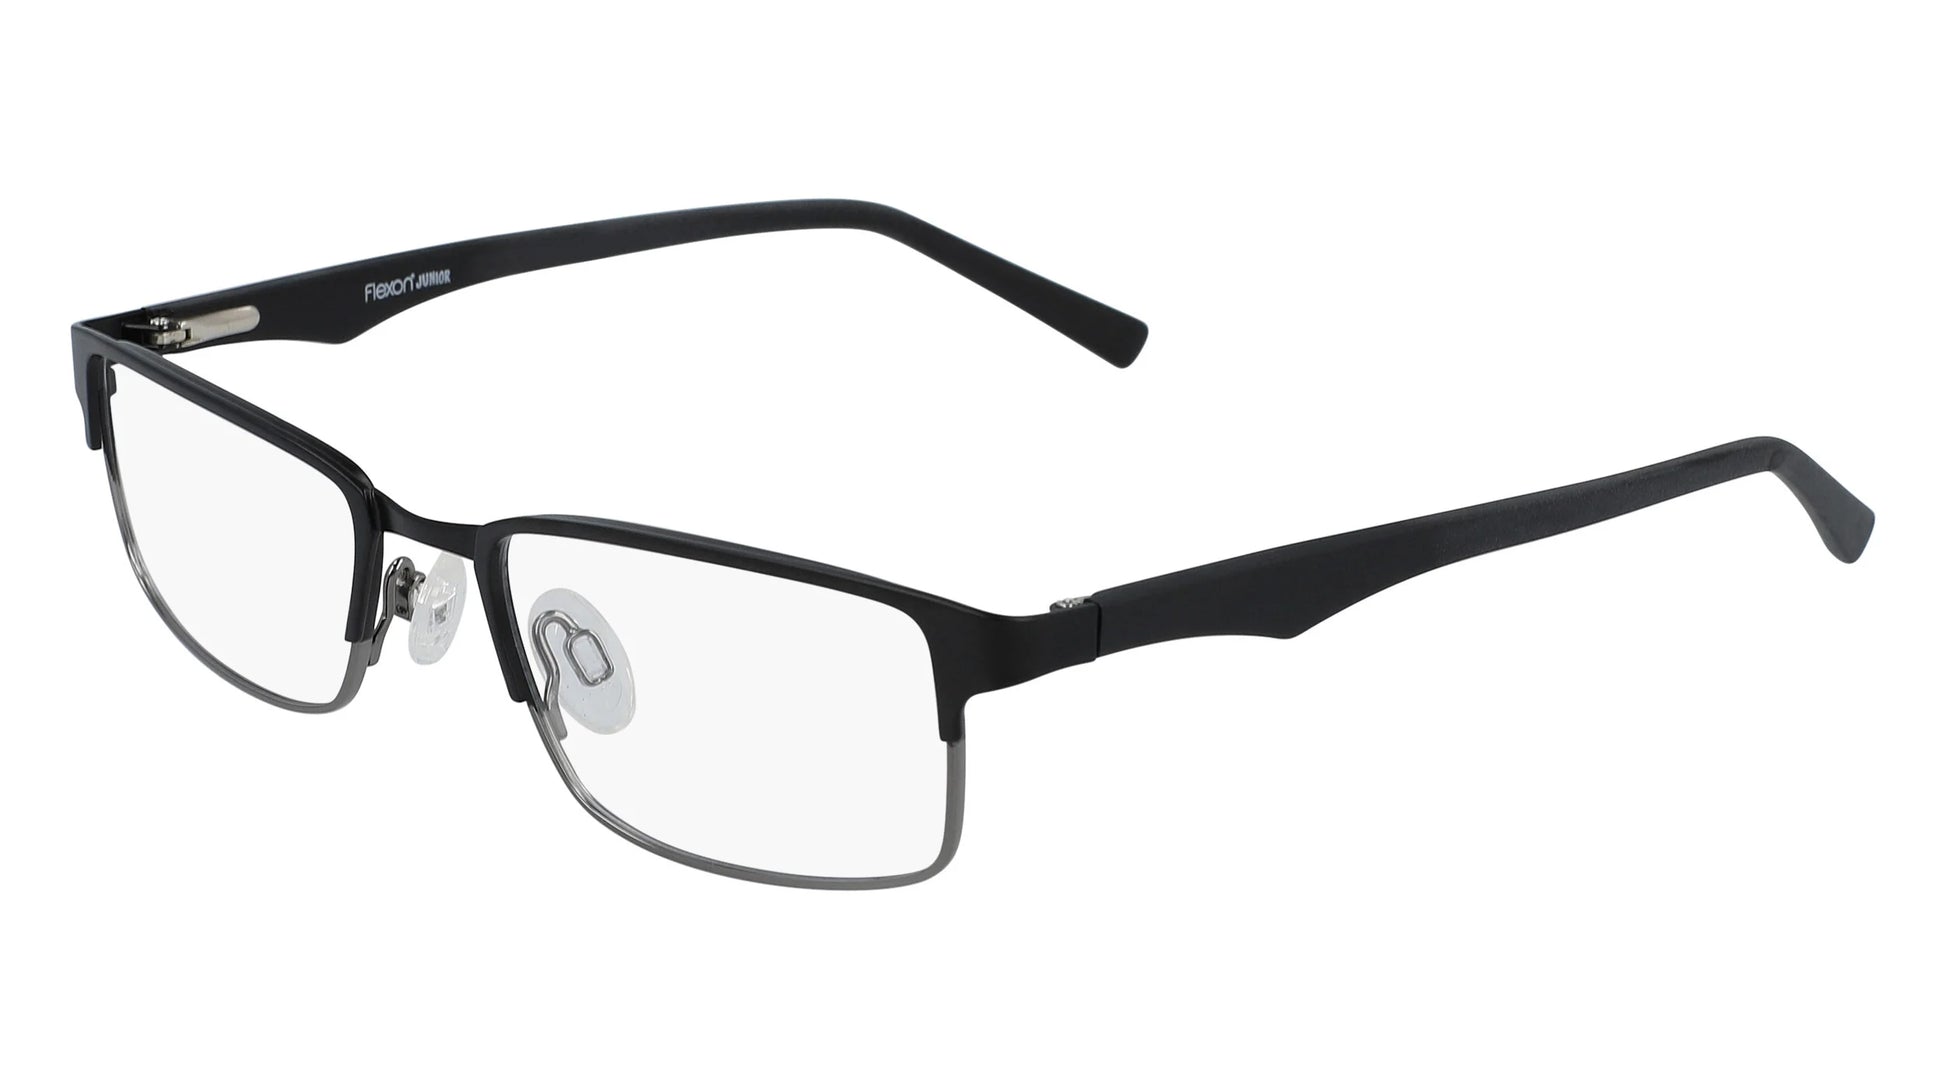 Flexon KIDS J4000 Eyeglasses Black